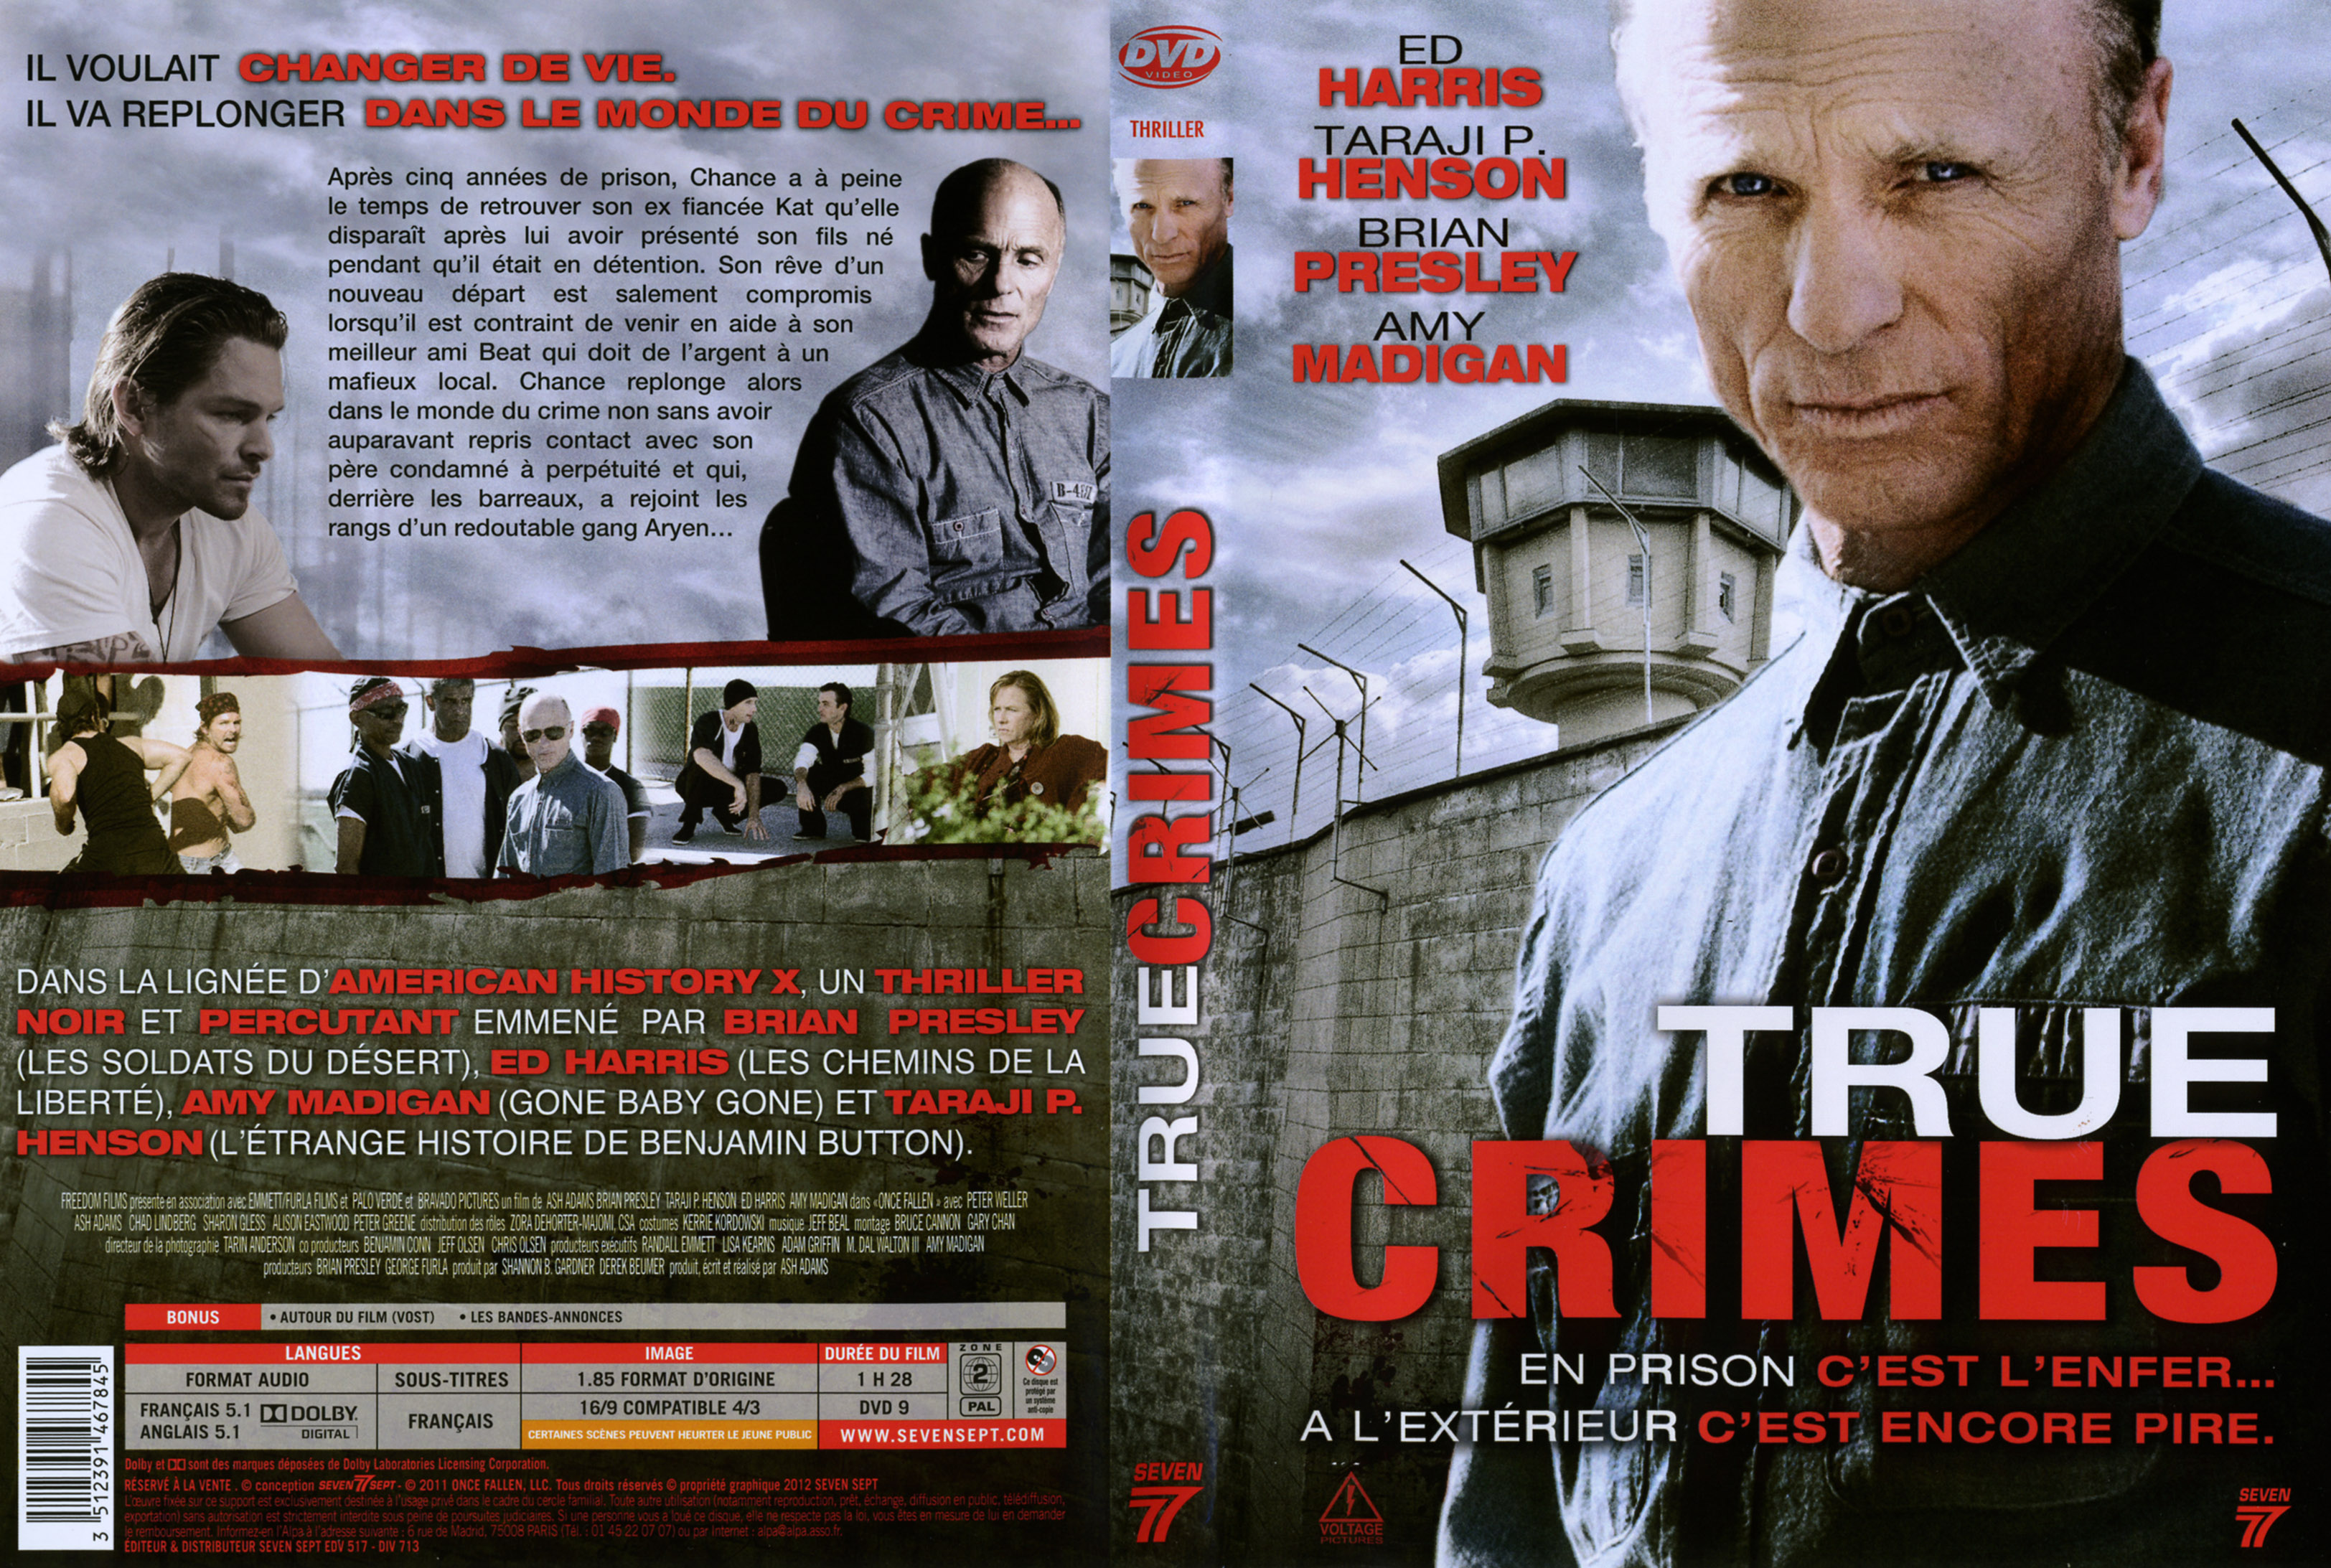 Jaquette DVD True crimes